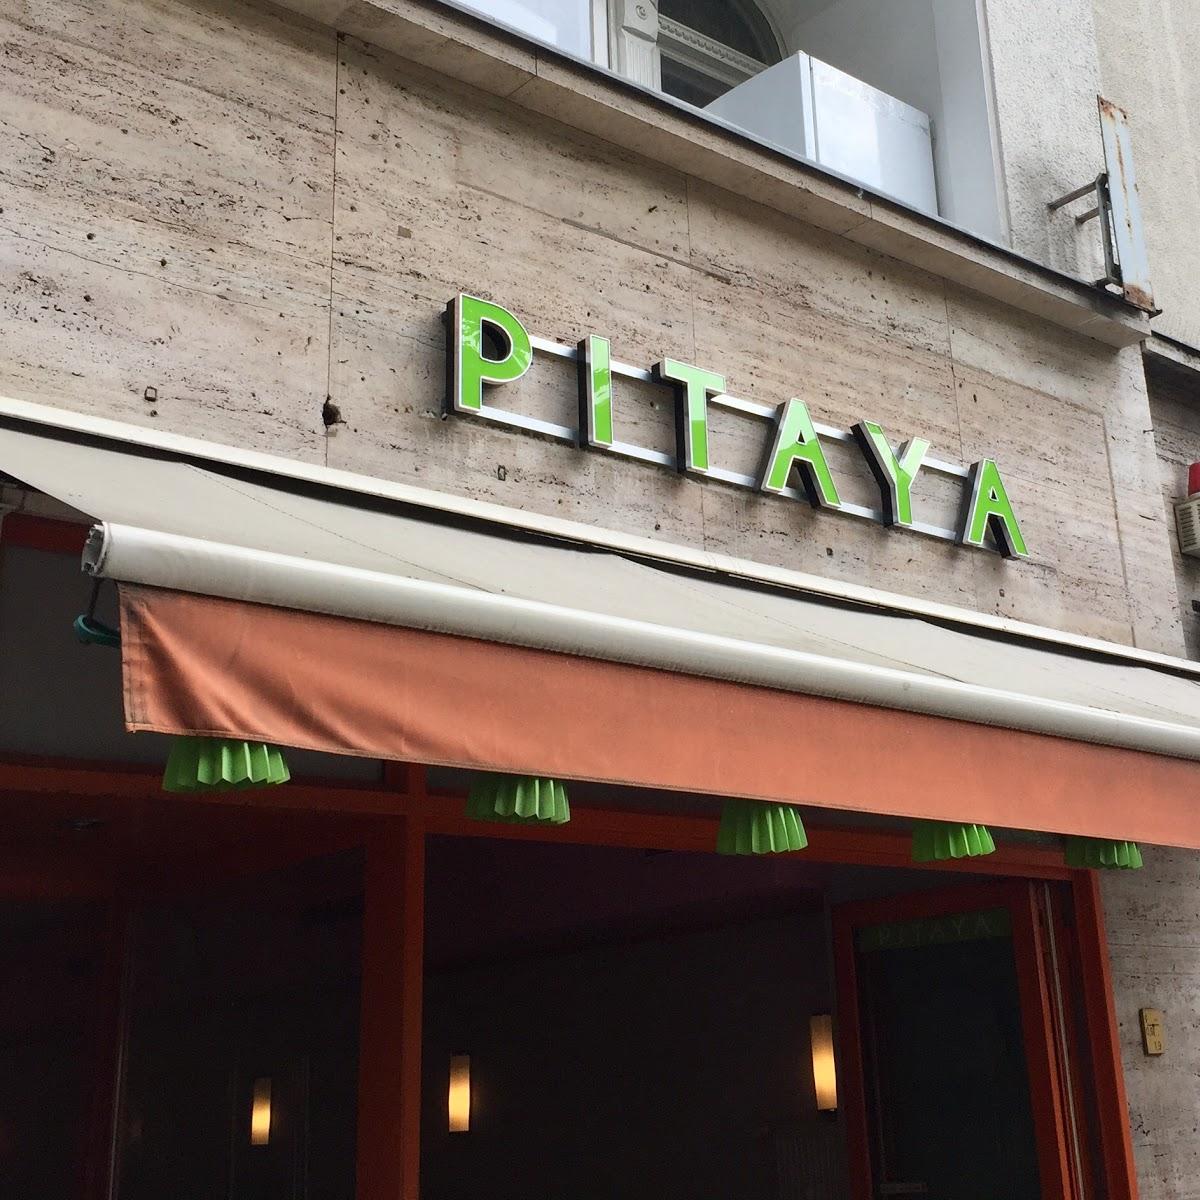 Restaurant "Pitaya" in Berlin